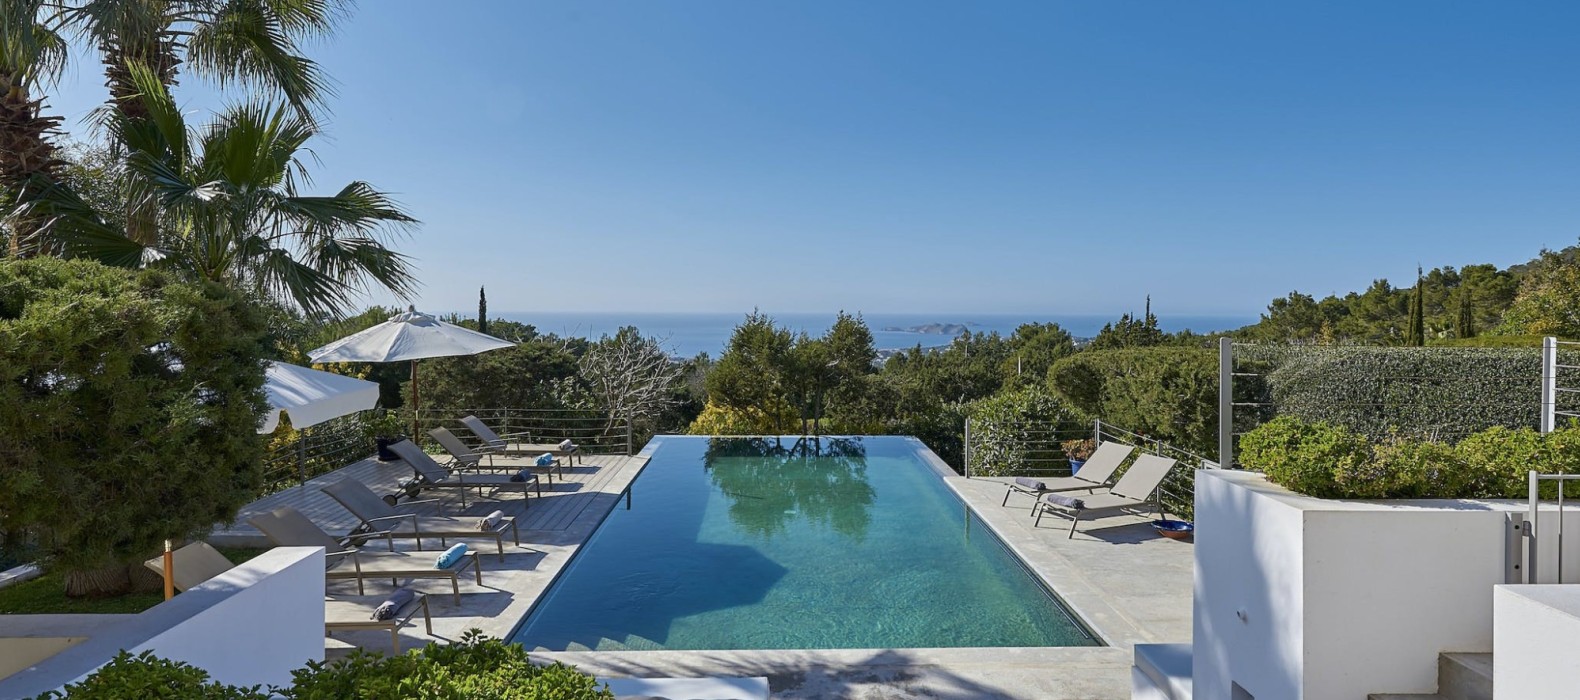 Exterior pool view of Villa Rivianna in Ibiza